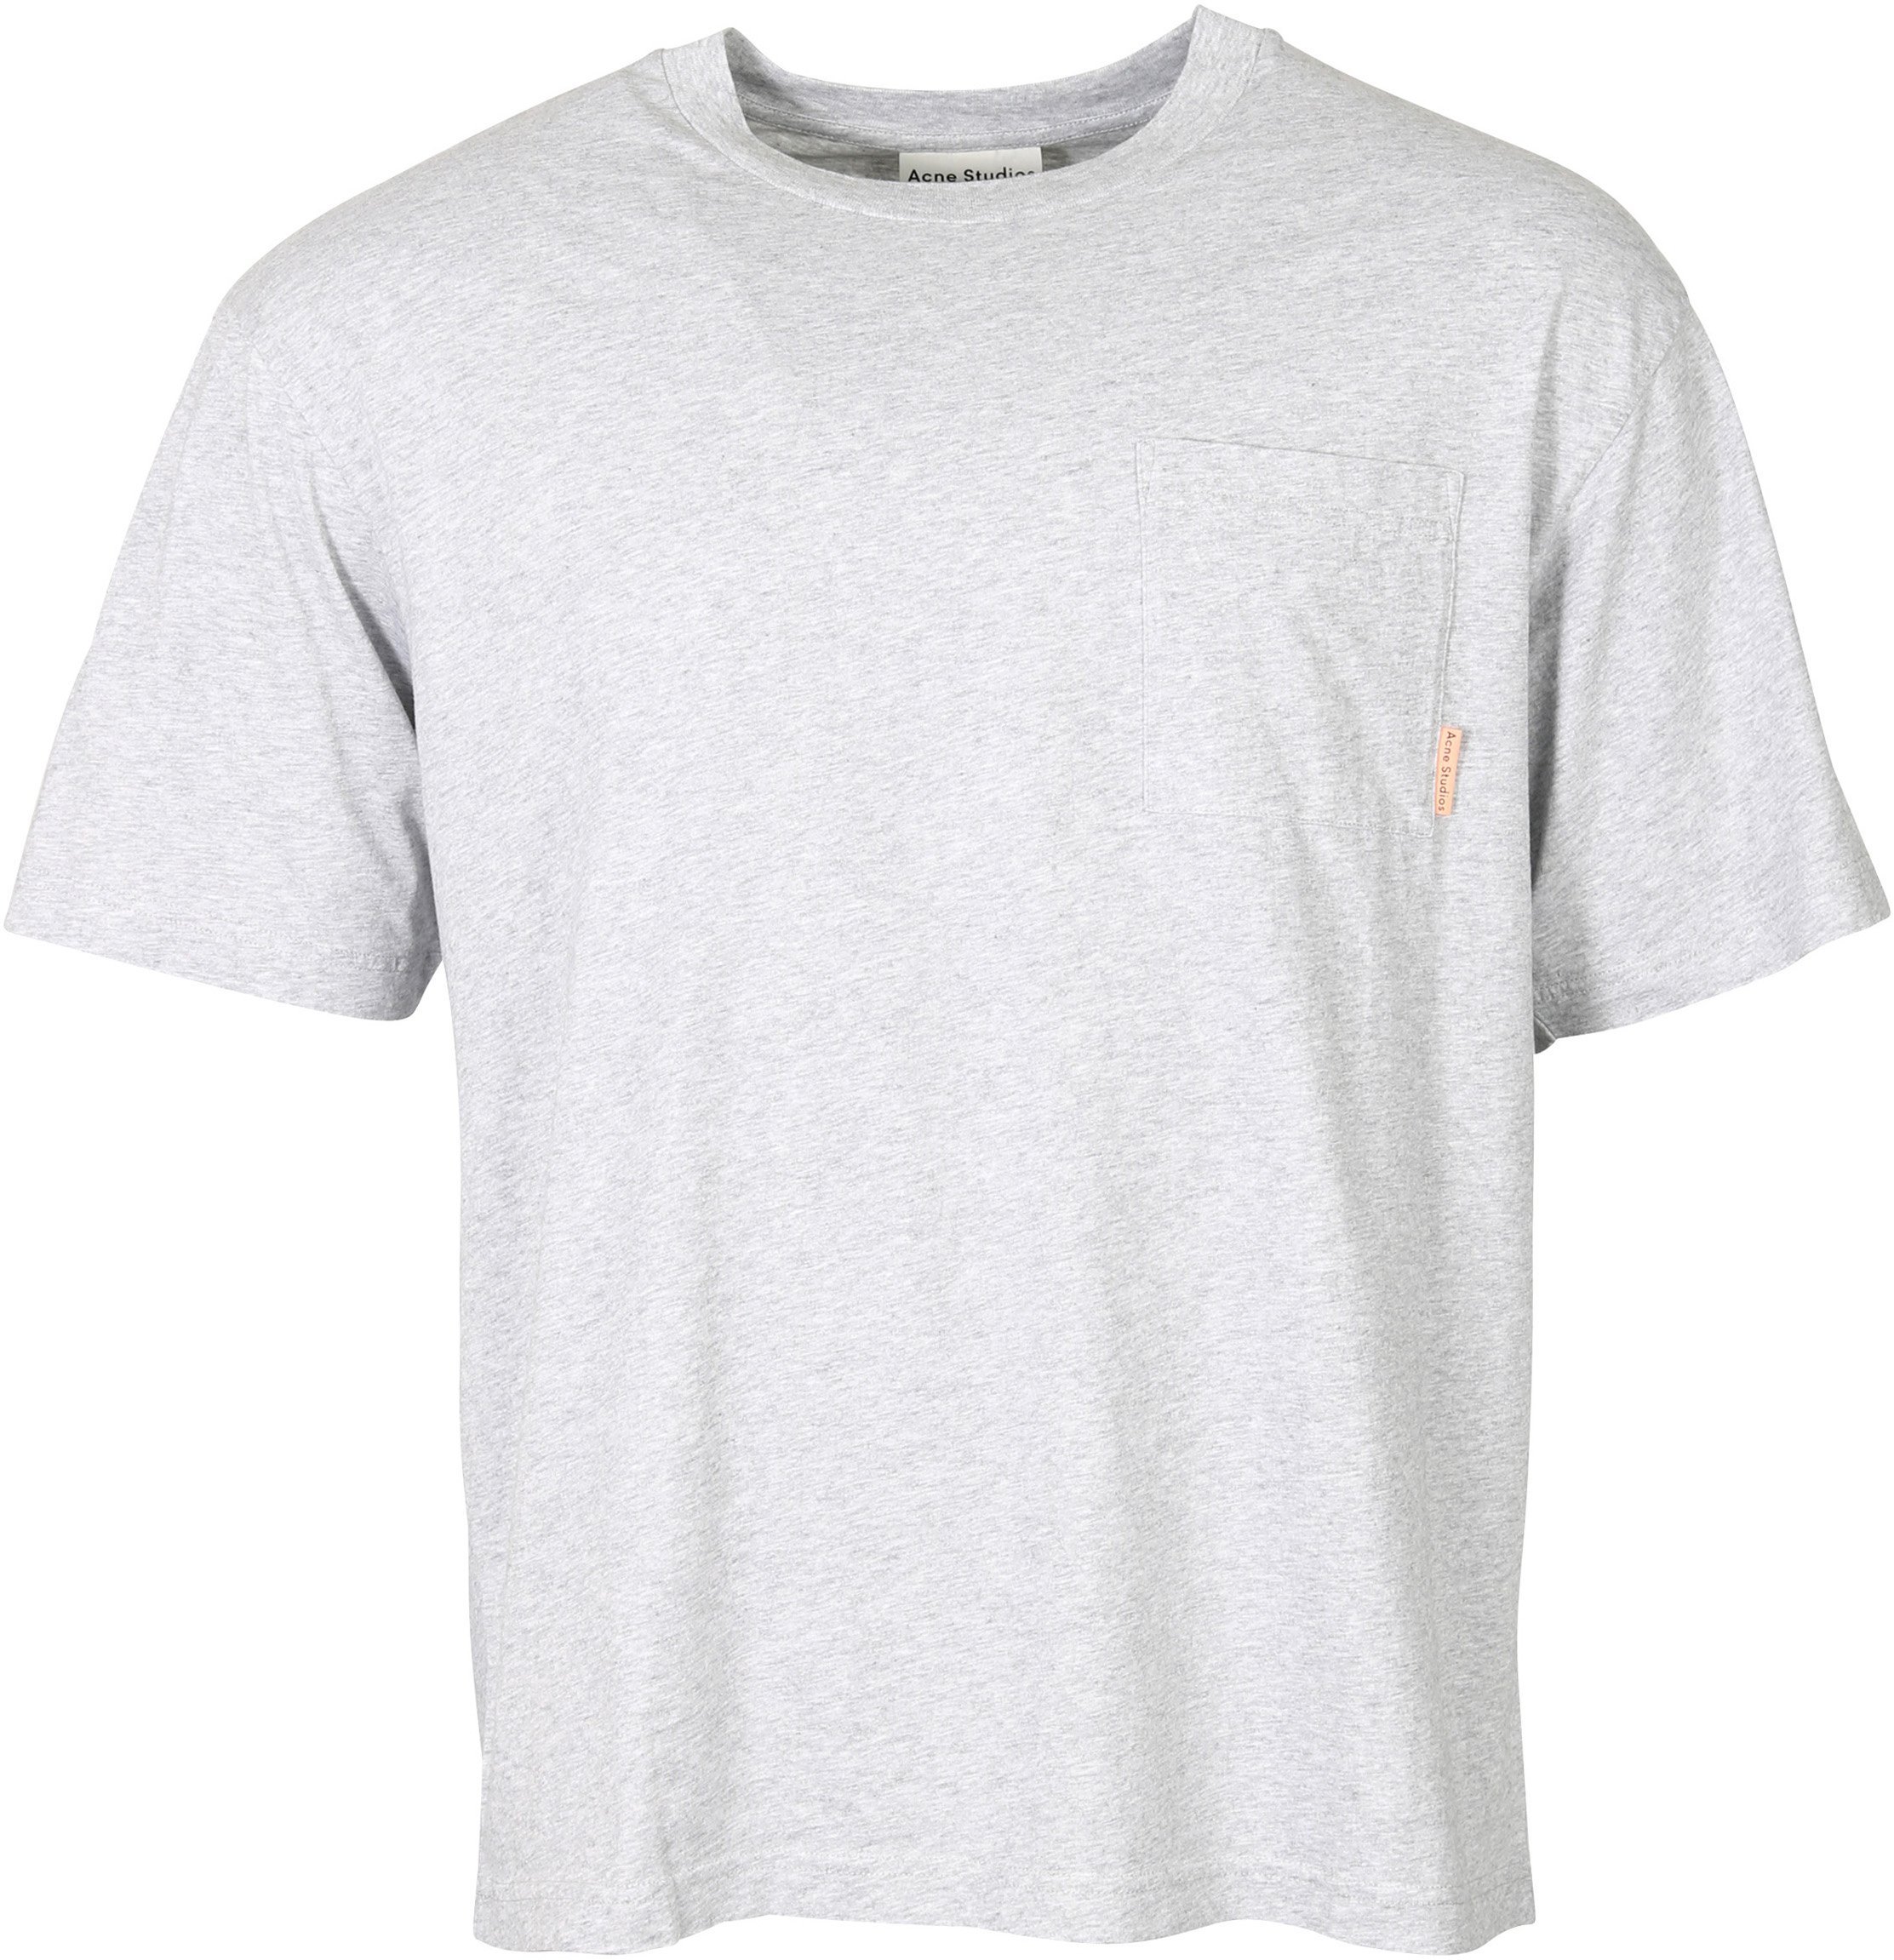 Acne Studios Extorr Pocket T-Shirt Grey Melange